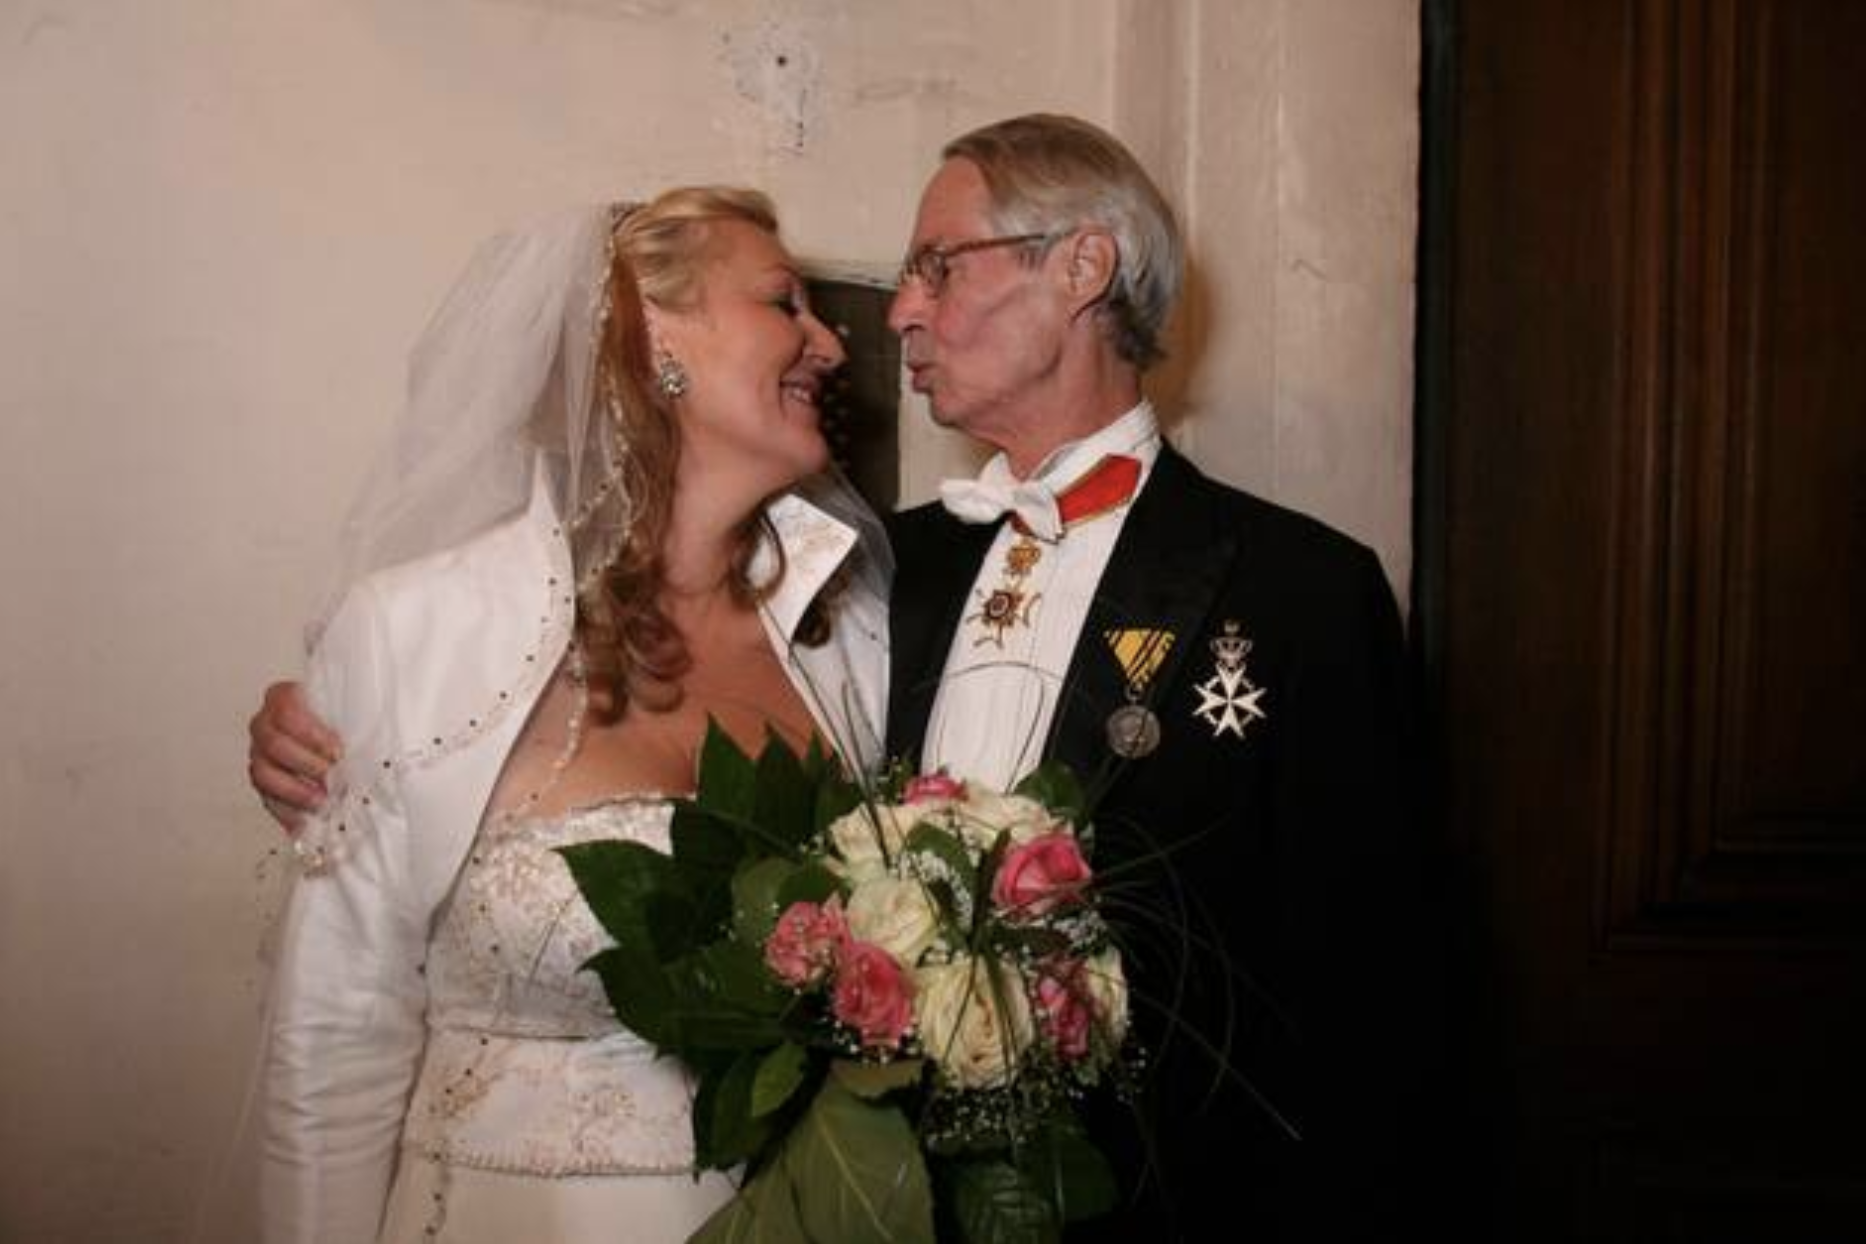 Prince Waldemar and Princess Antonia Schaumburg-Lippe